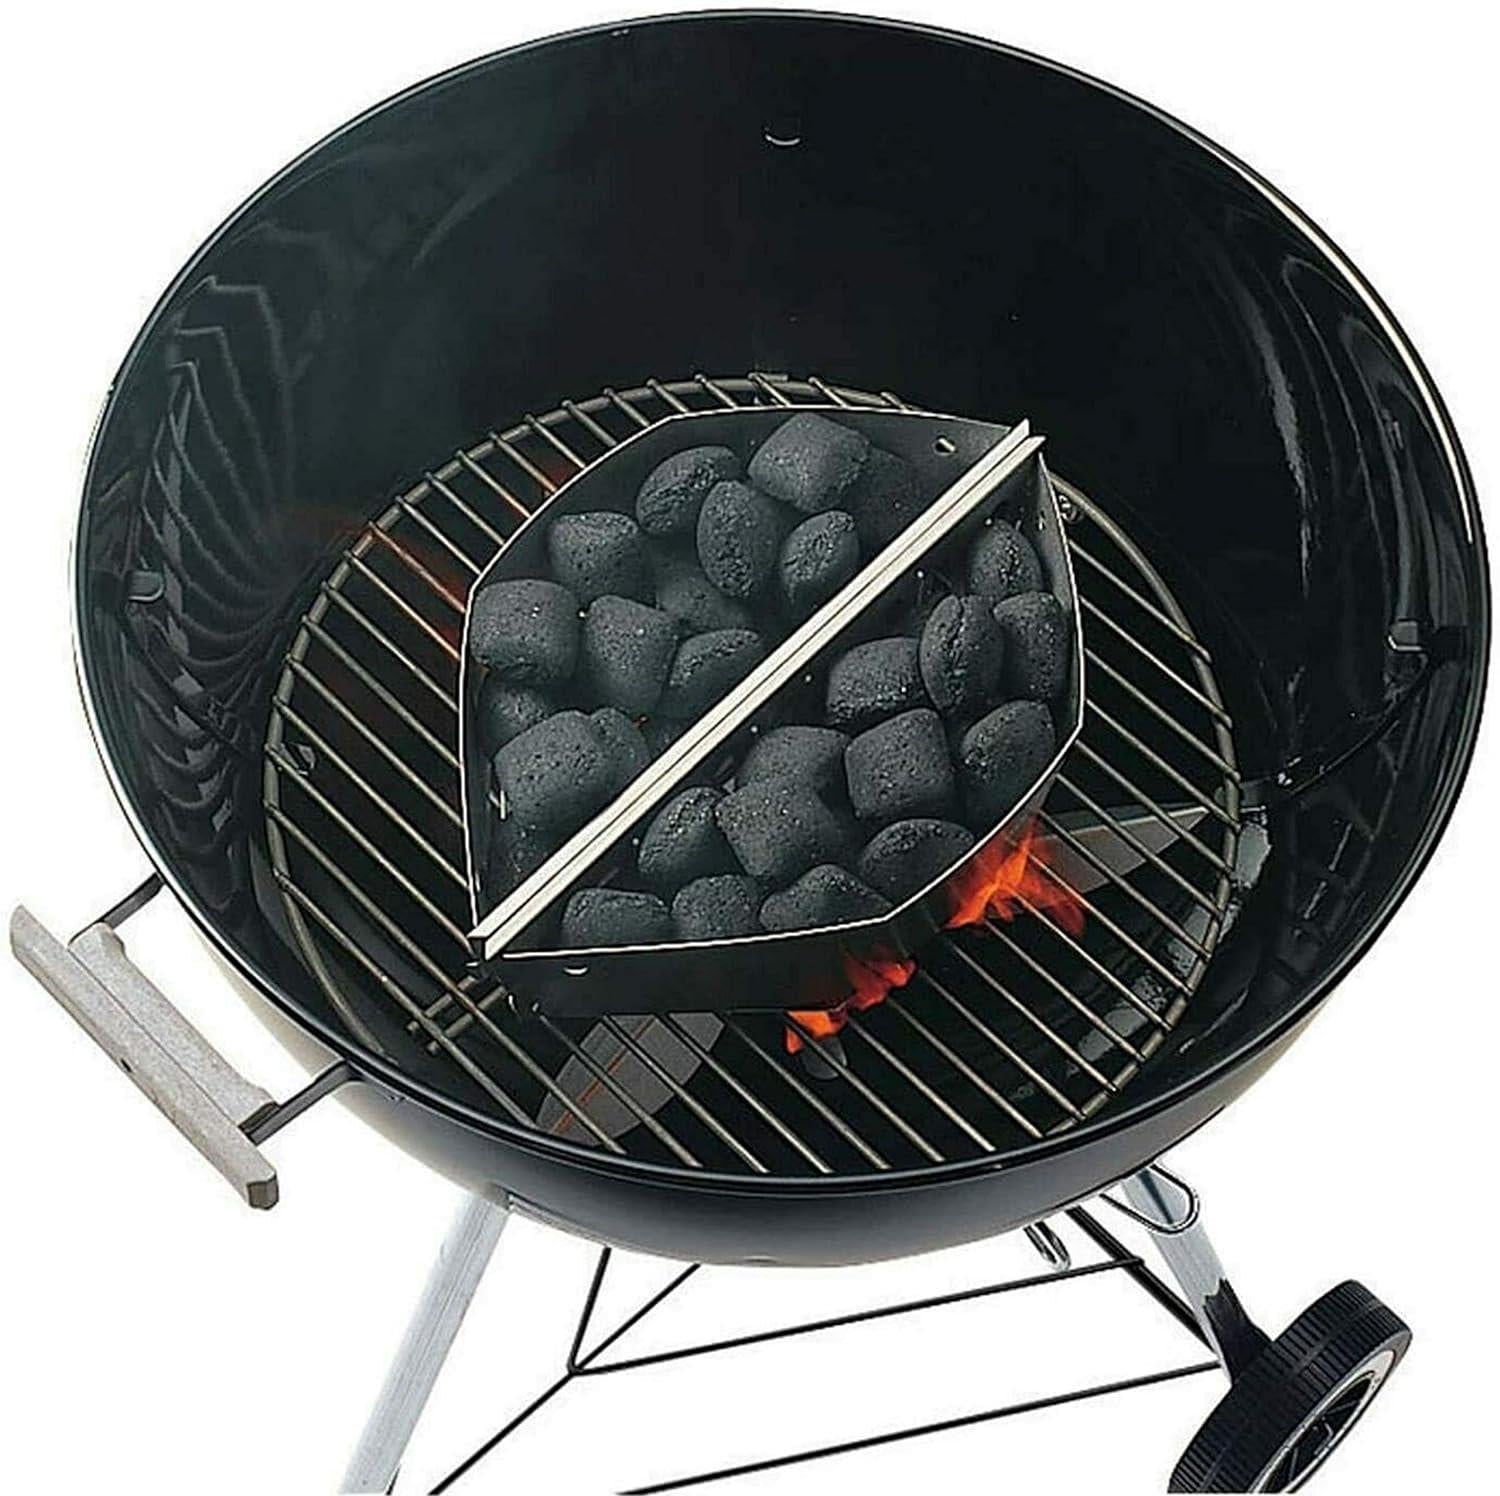 2Pcs Steel BBQ Grill Basket Charcoal Briquette Holders